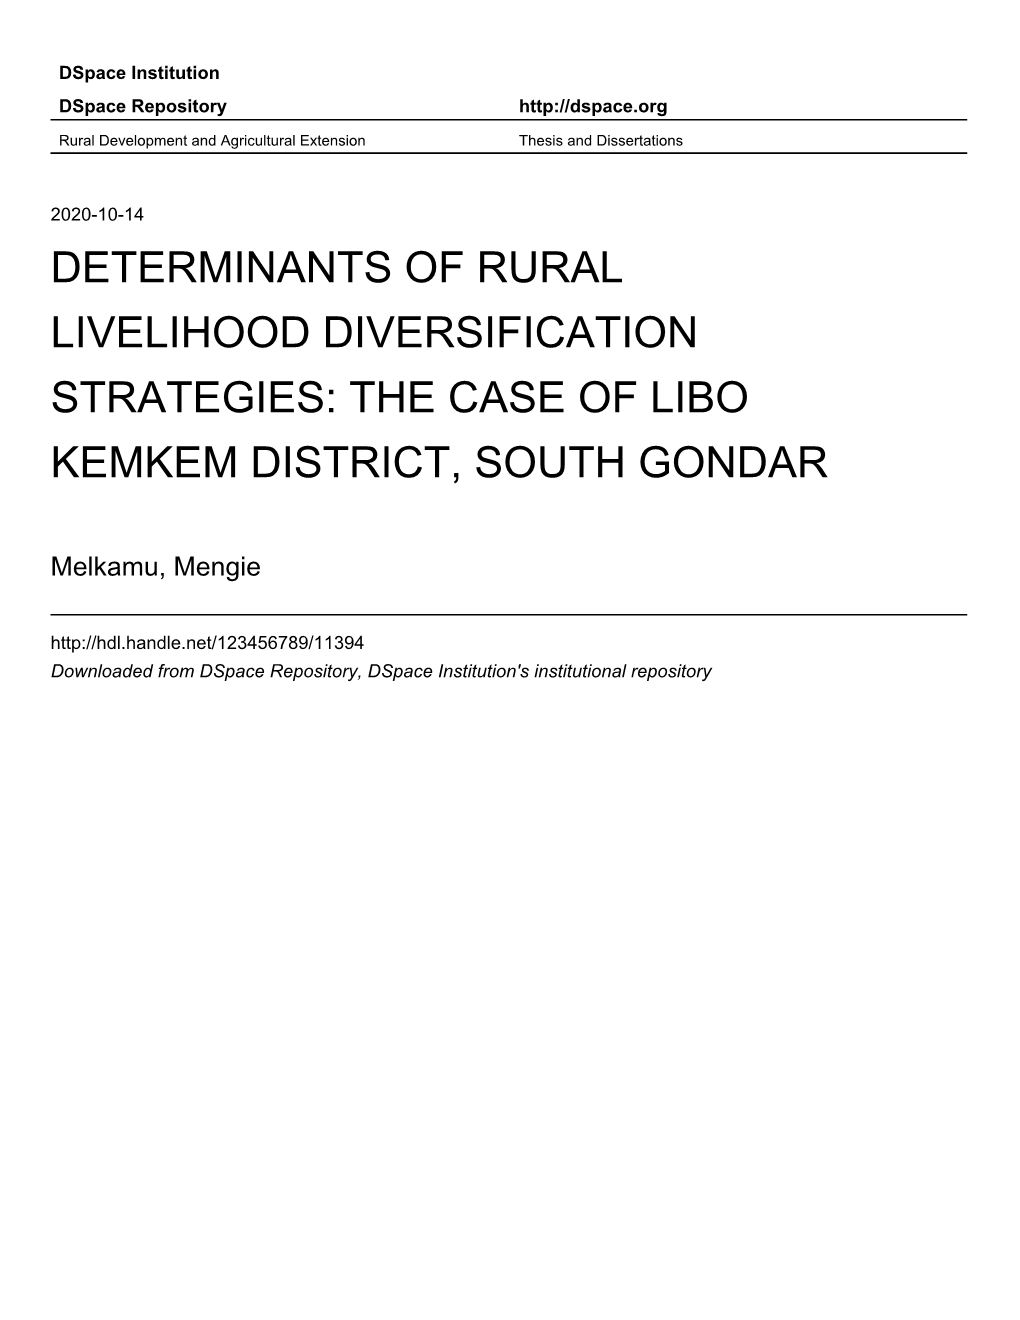 The Case of Libo Kemkem District, South Gondar